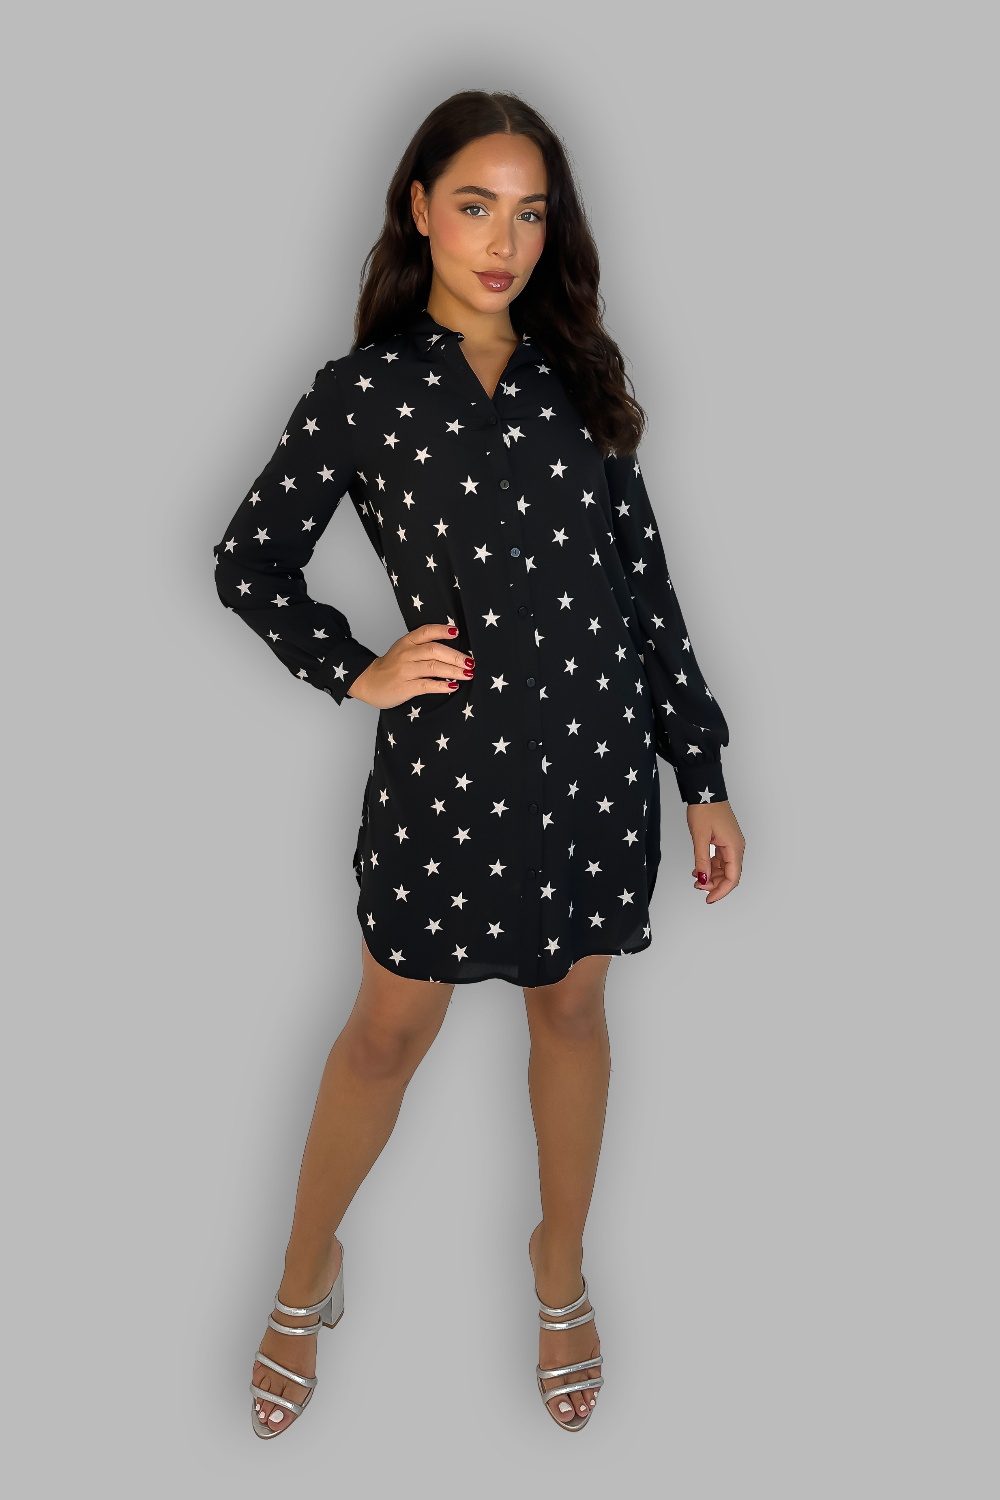 Star Print Black Long Sleeve Shirt Dress-SinglePrice